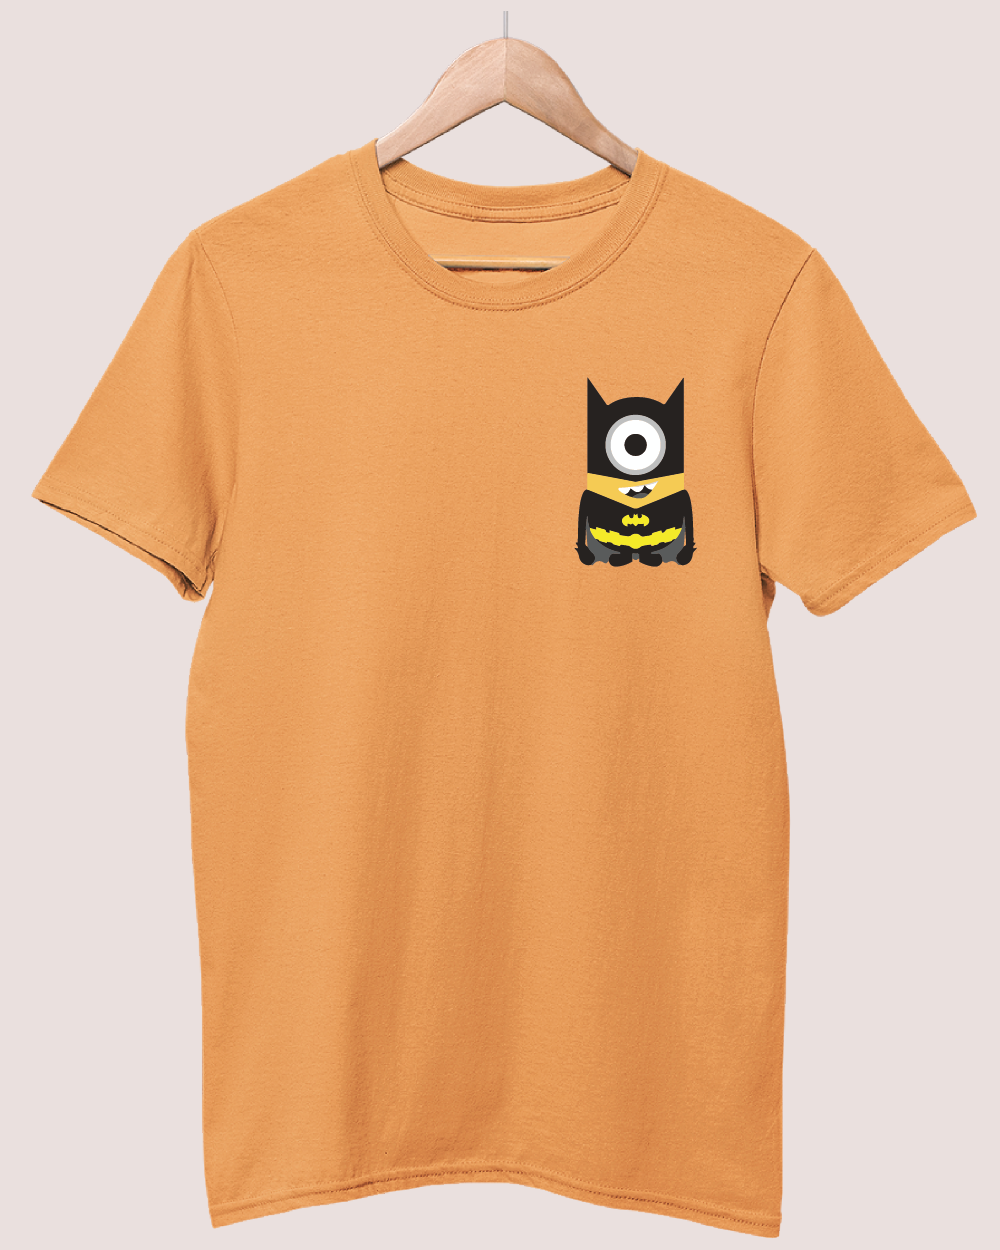 Minion Batman Pocket T-shirt